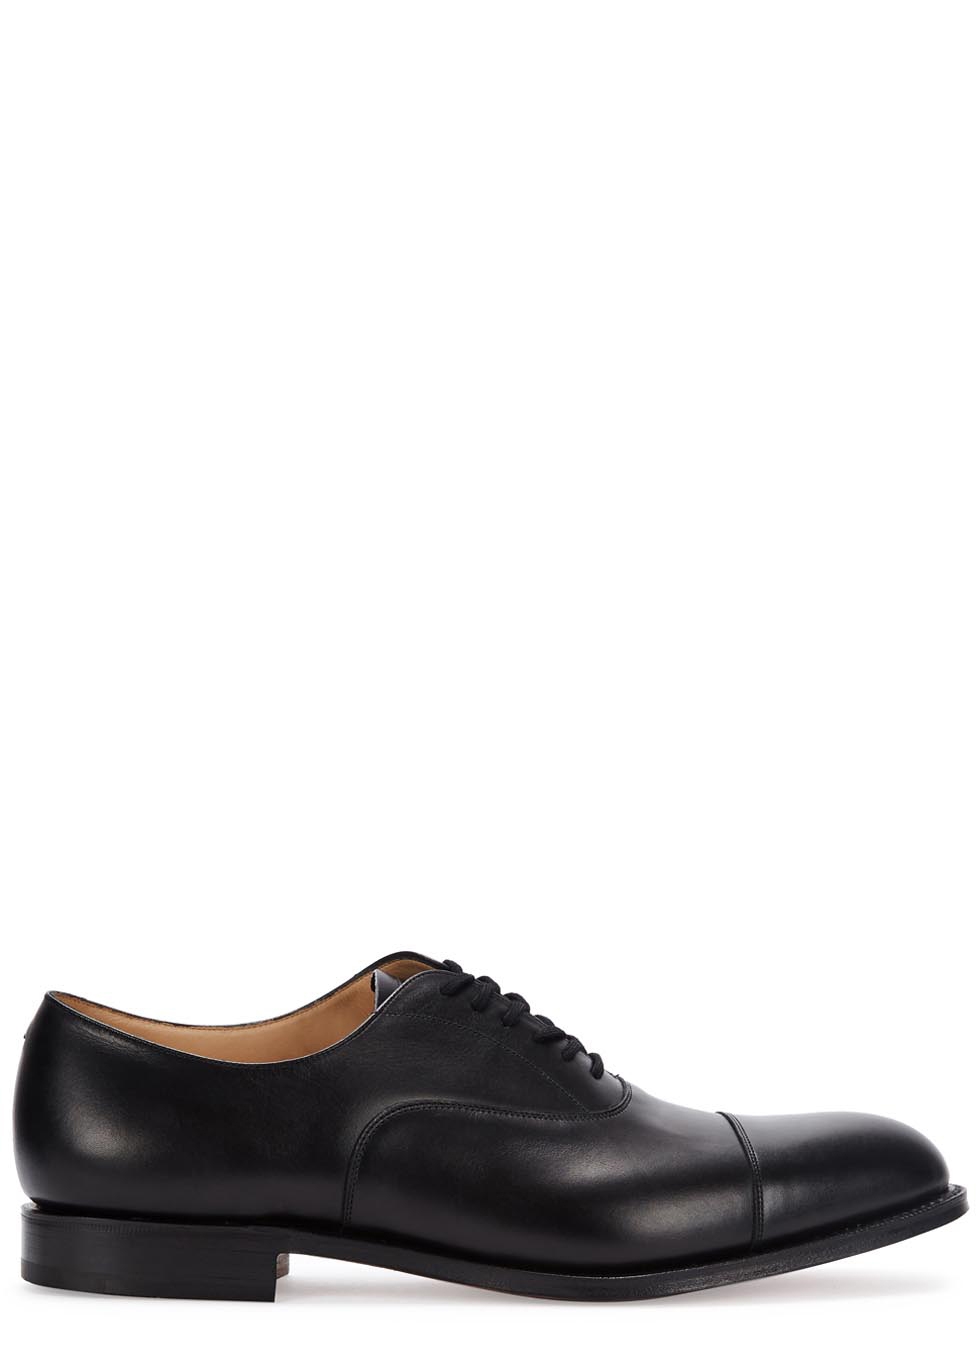 Dubai black leather Oxford shoes